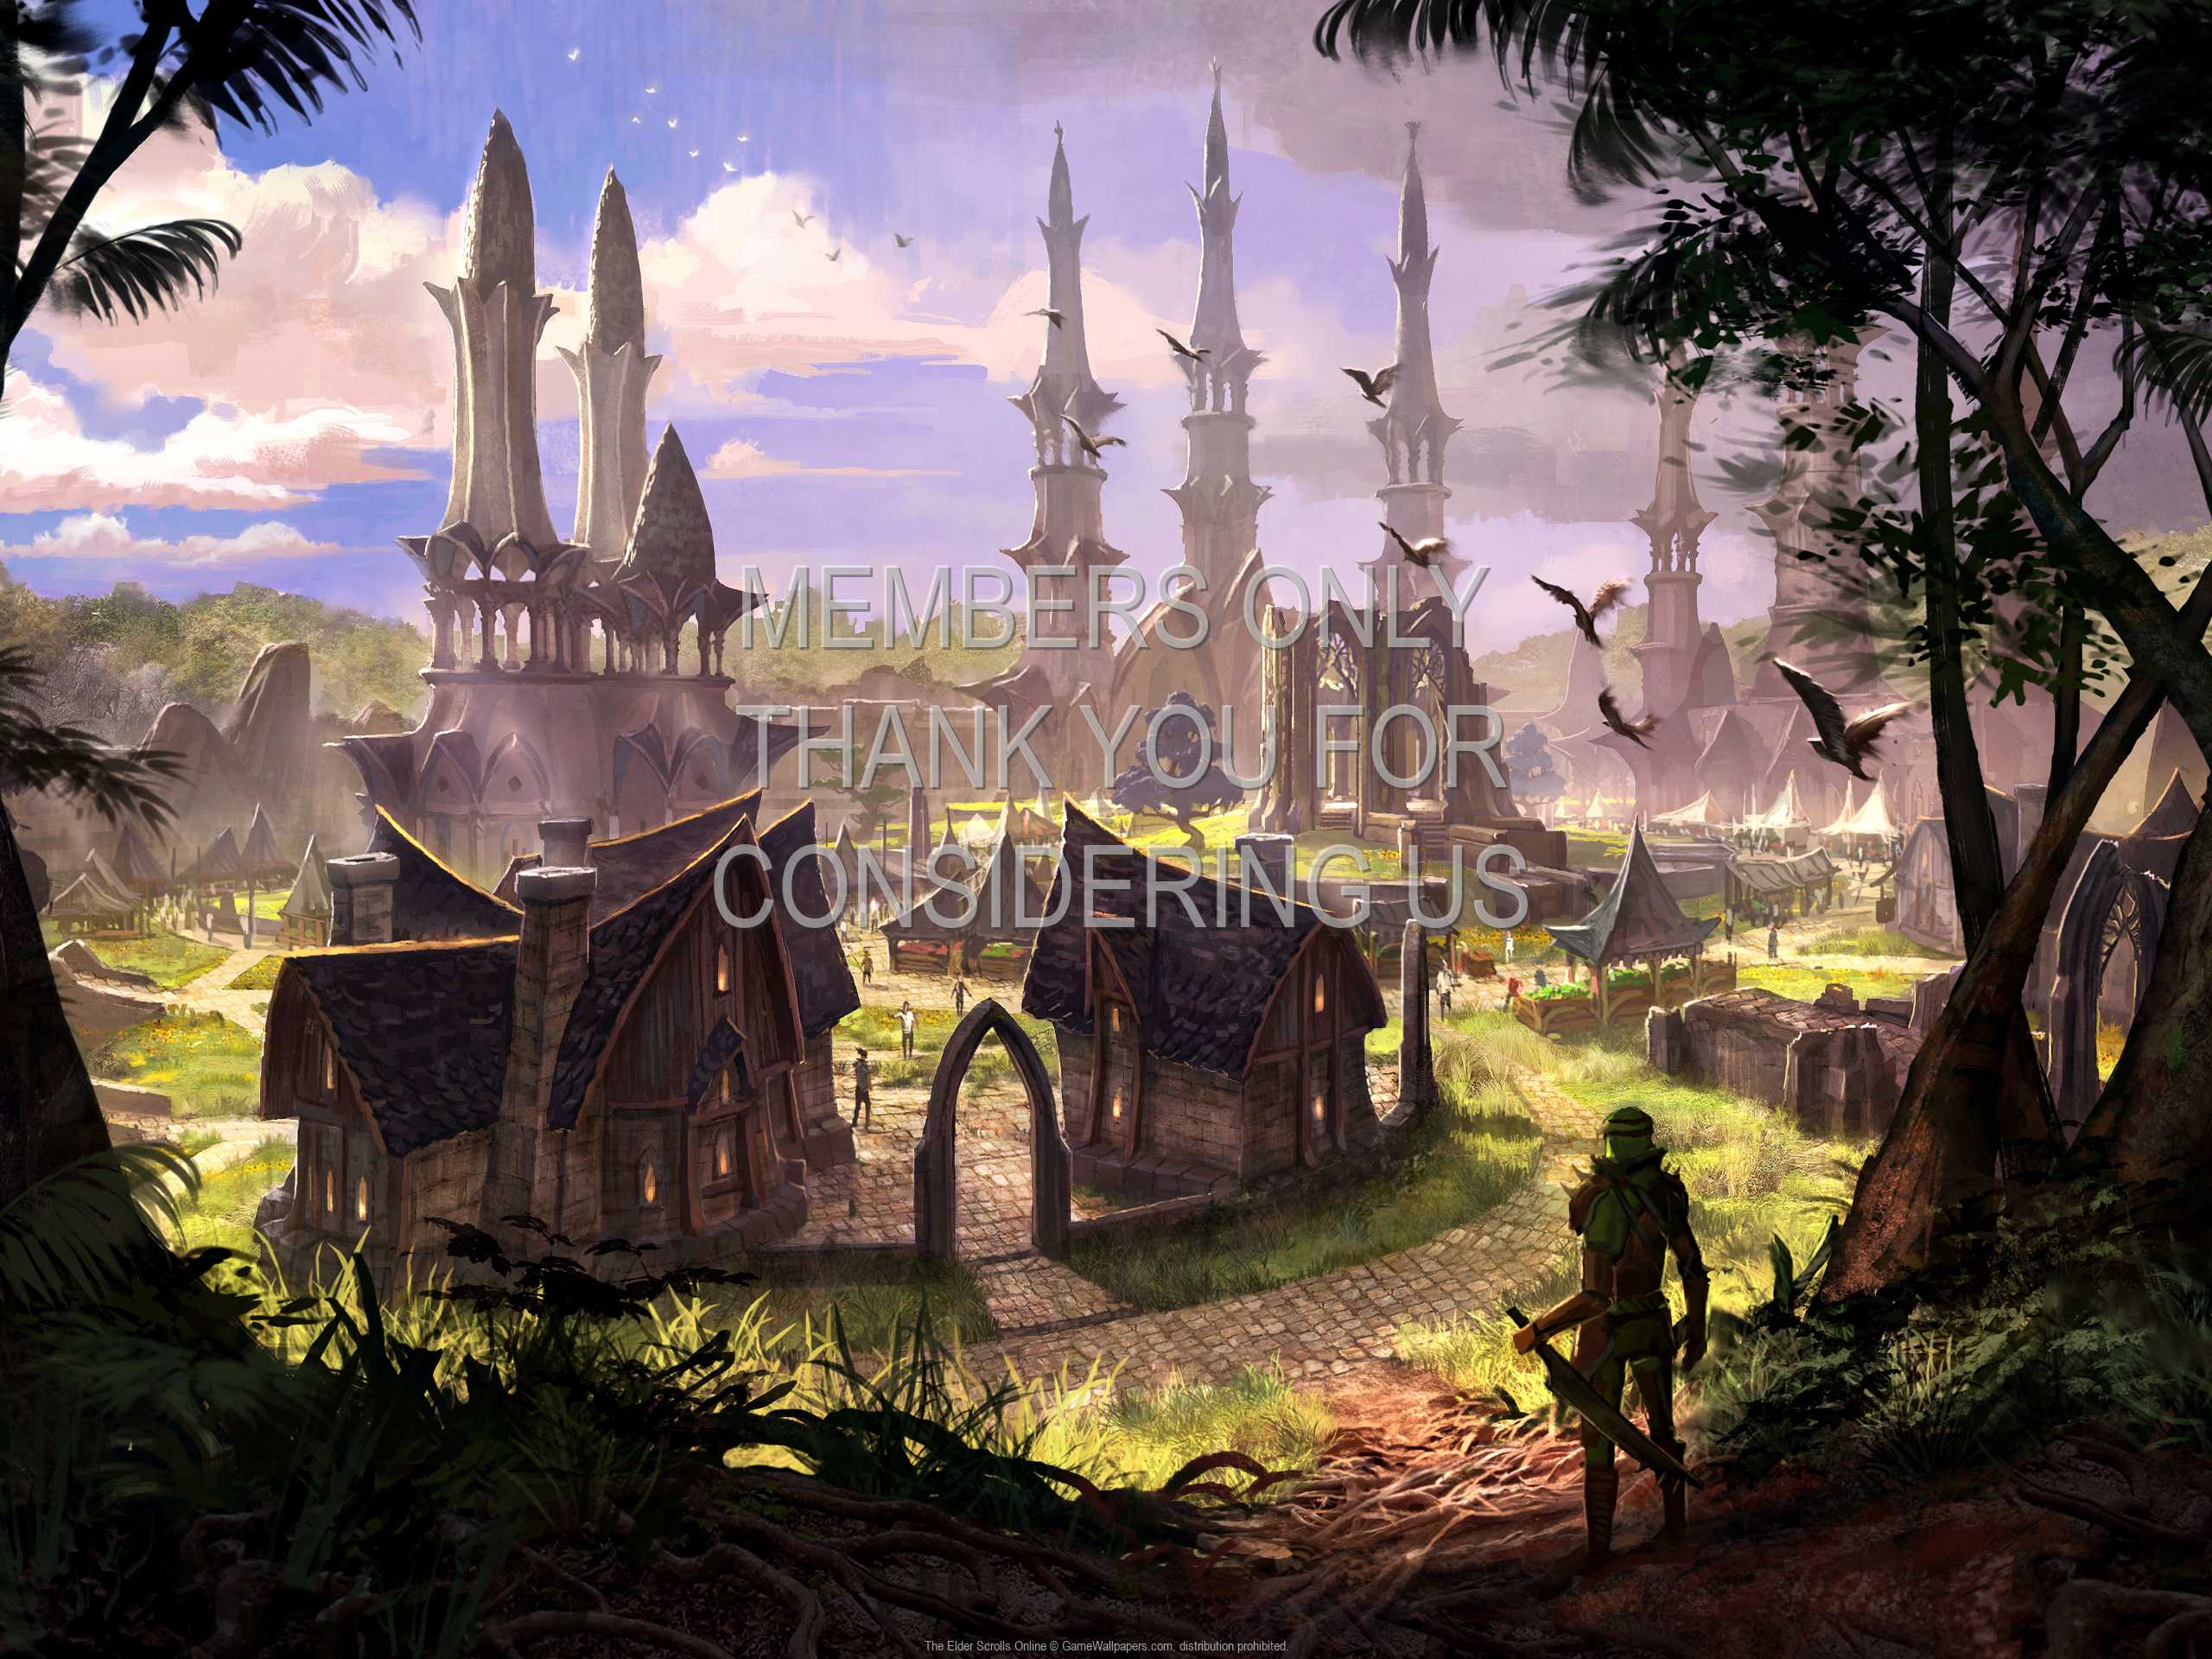 The Elder Scrolls Online 1080p Horizontal Mobile wallpaper or background 01